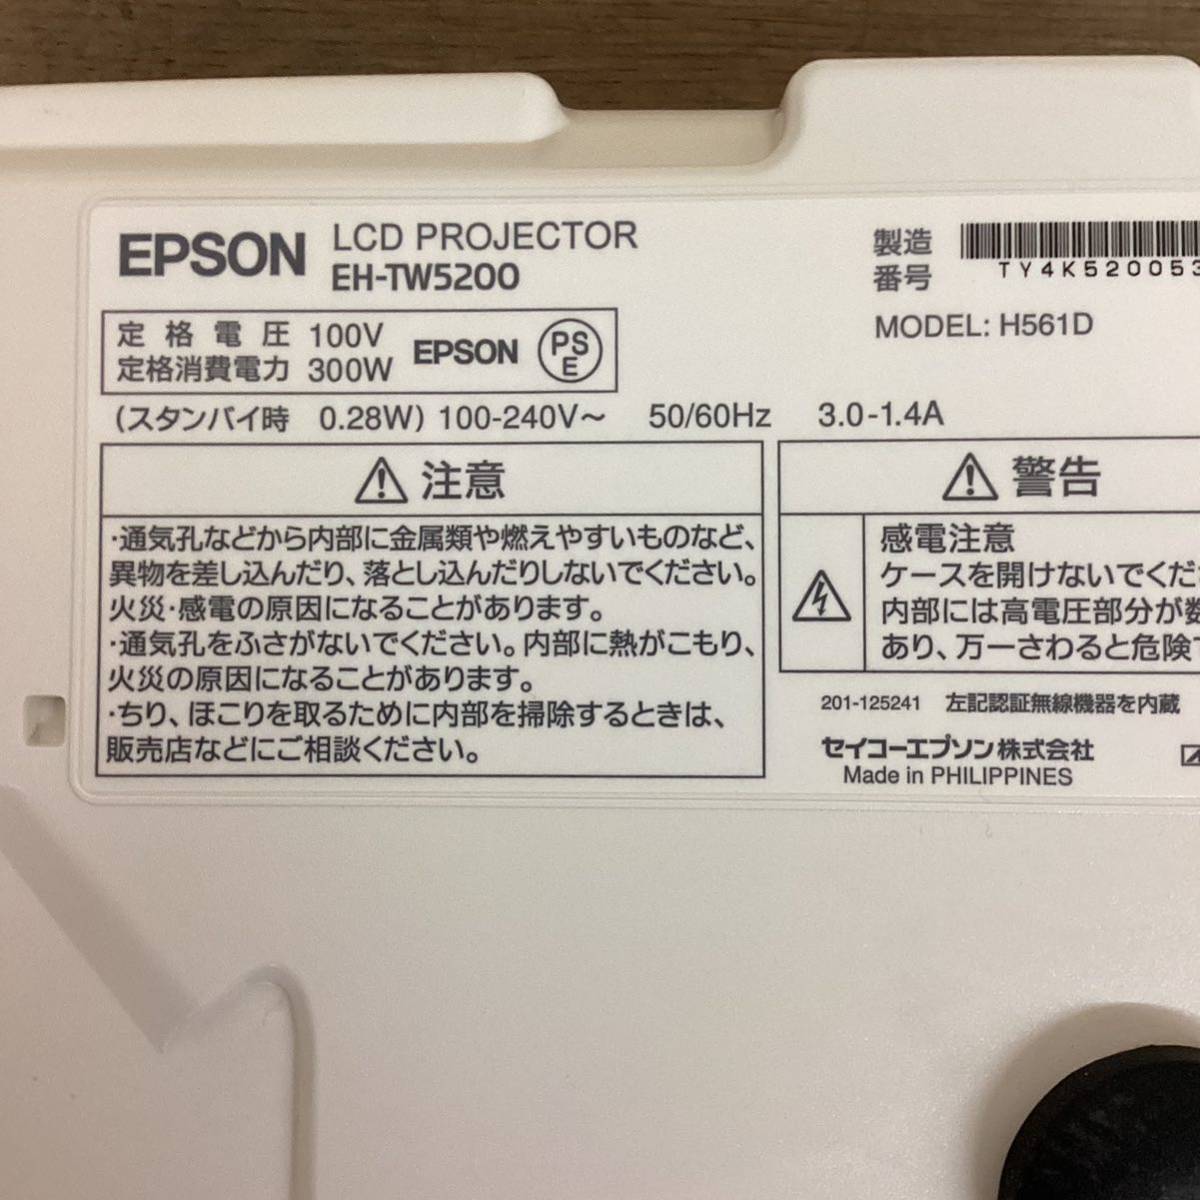 EPSON プロジェクター EH-TW5200 HDMI エプソン リモコン コード スタートアップガイド付 ゆうパック80サイズ発送 _画像8